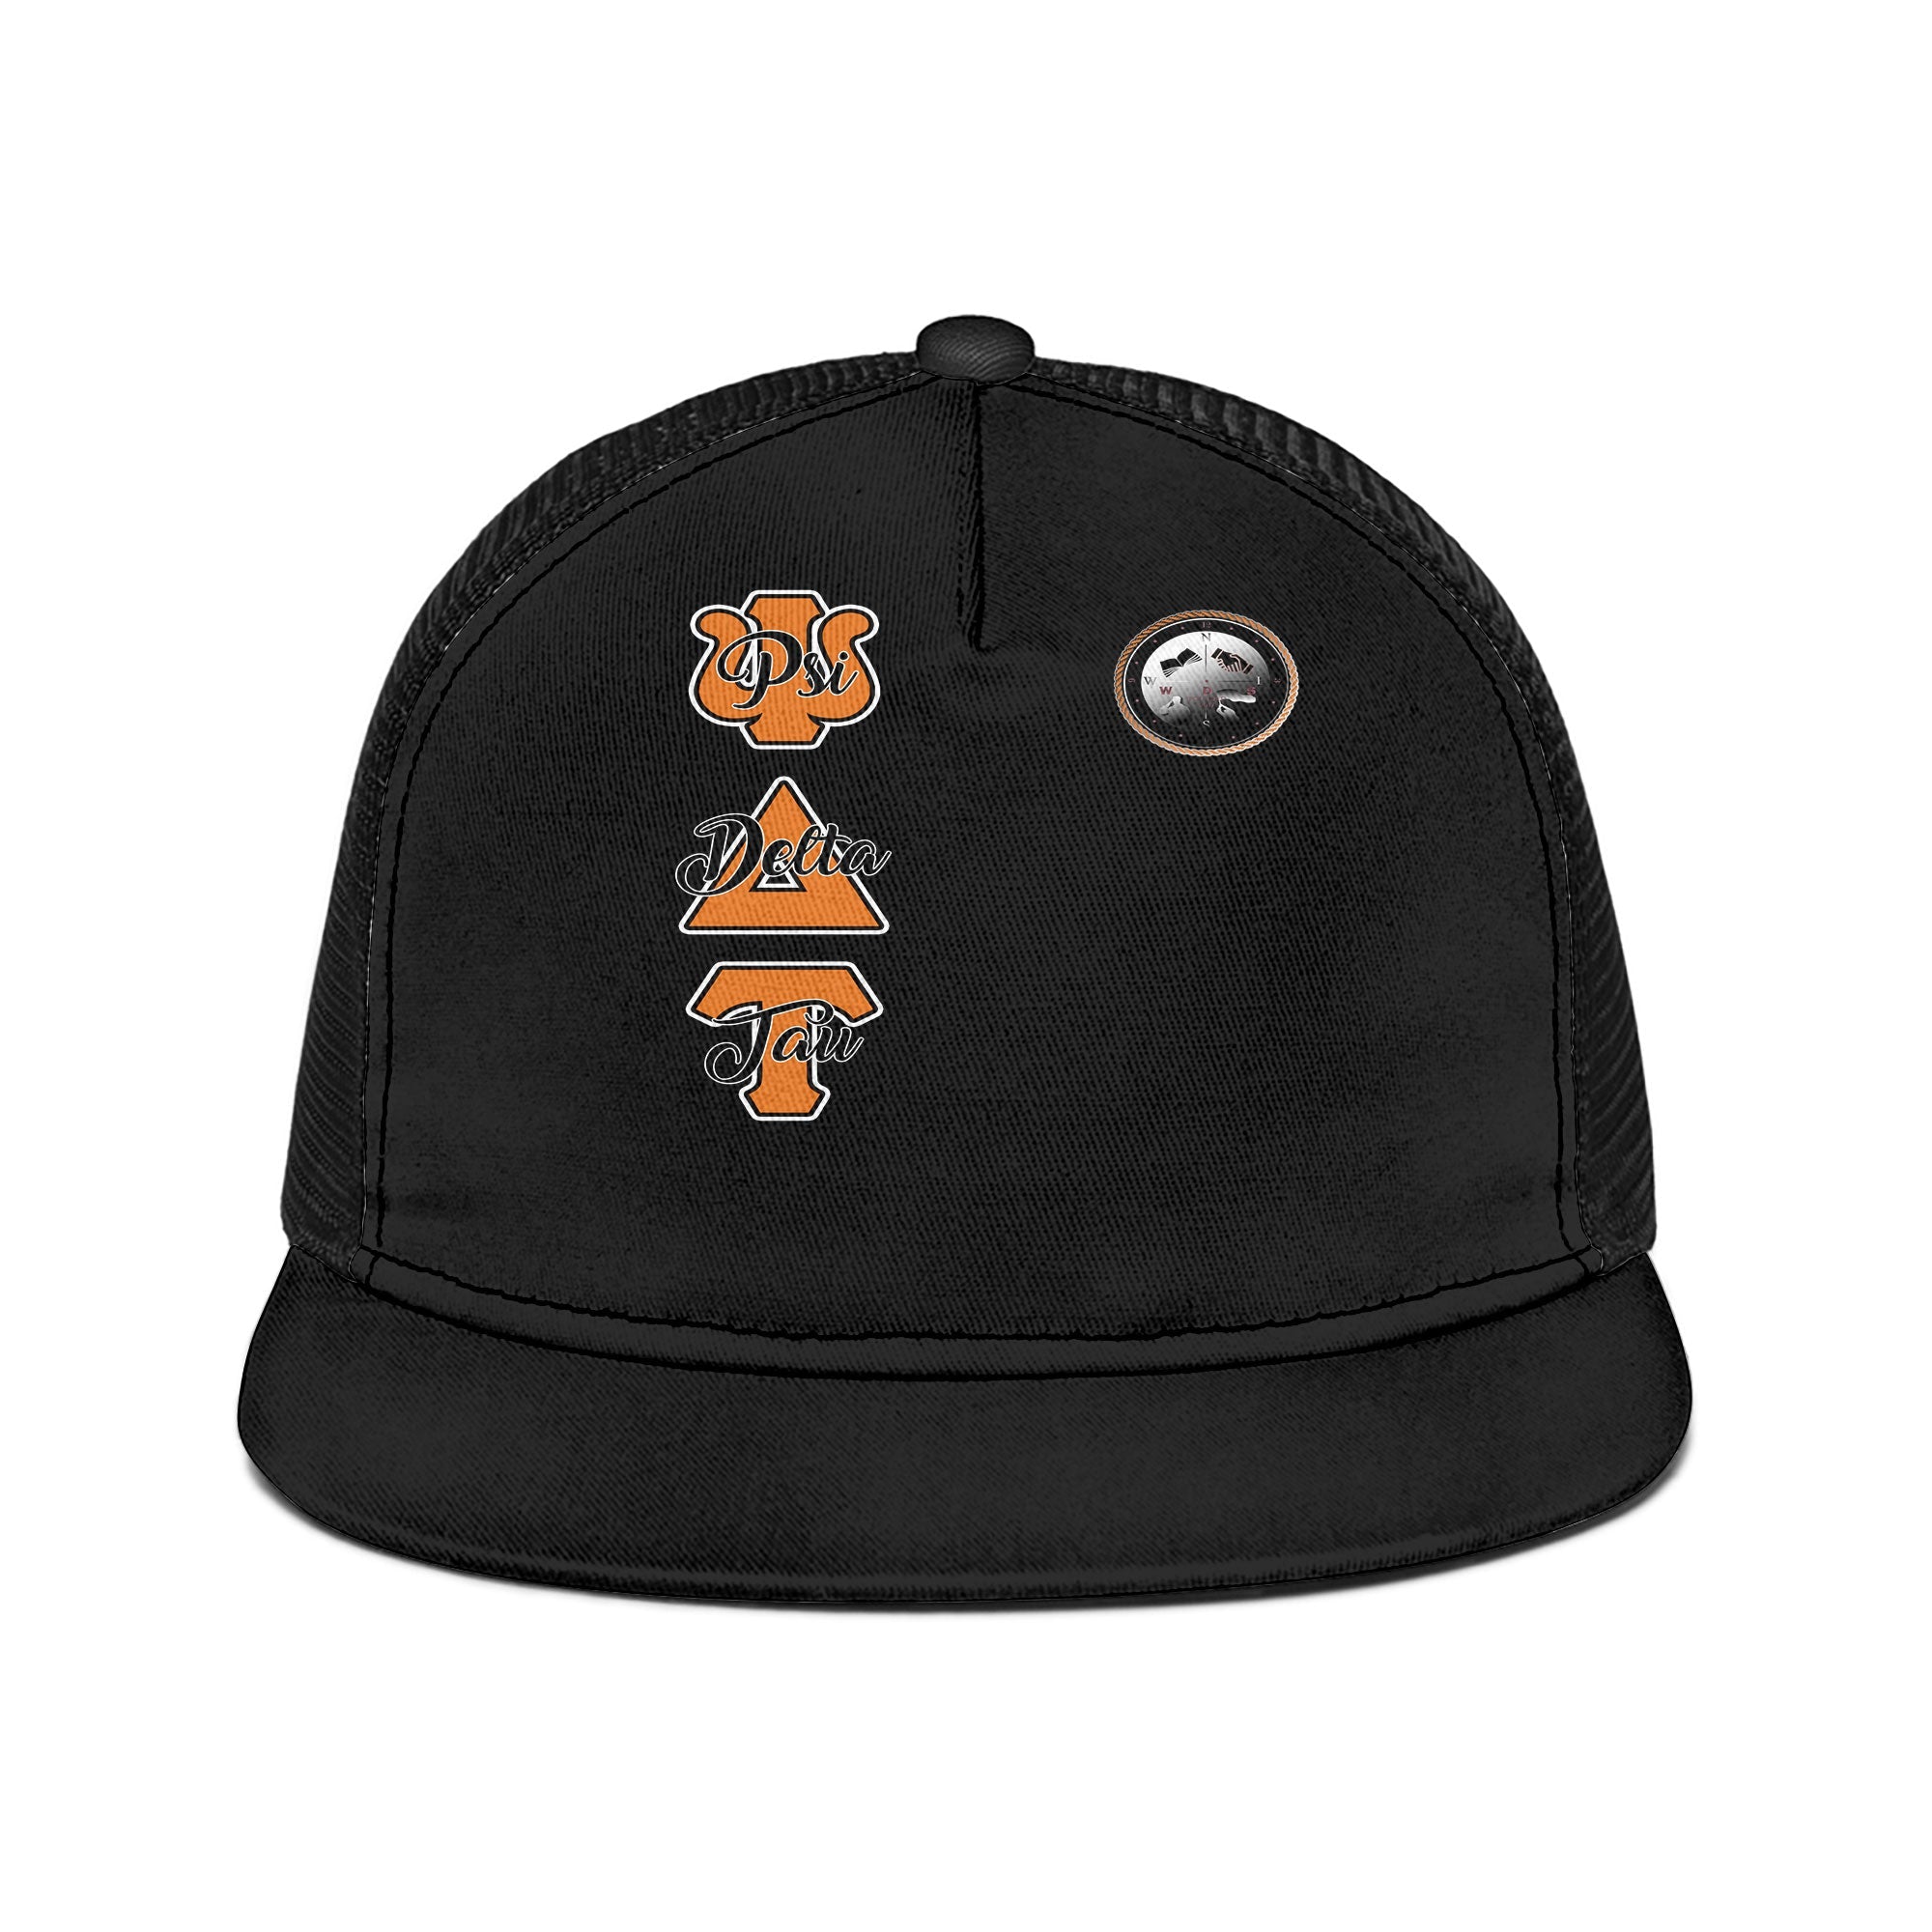 Fraternity Trucker Hat - Psi Delta Tau Trucker Hat Original Dark Style